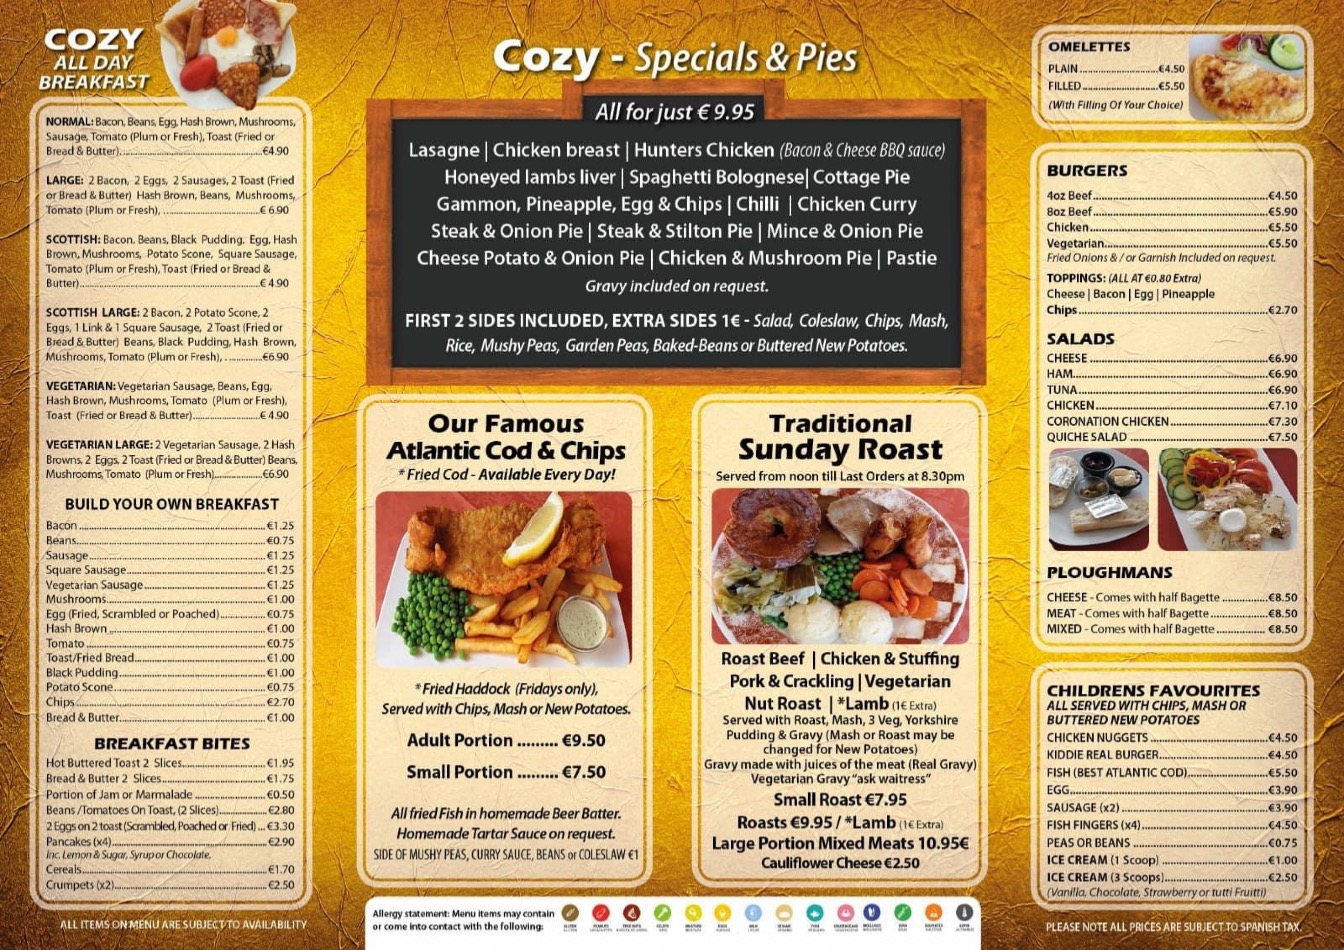 Takeaway Restaurant Menu Page - Cozy Cafe - Costa Adeje